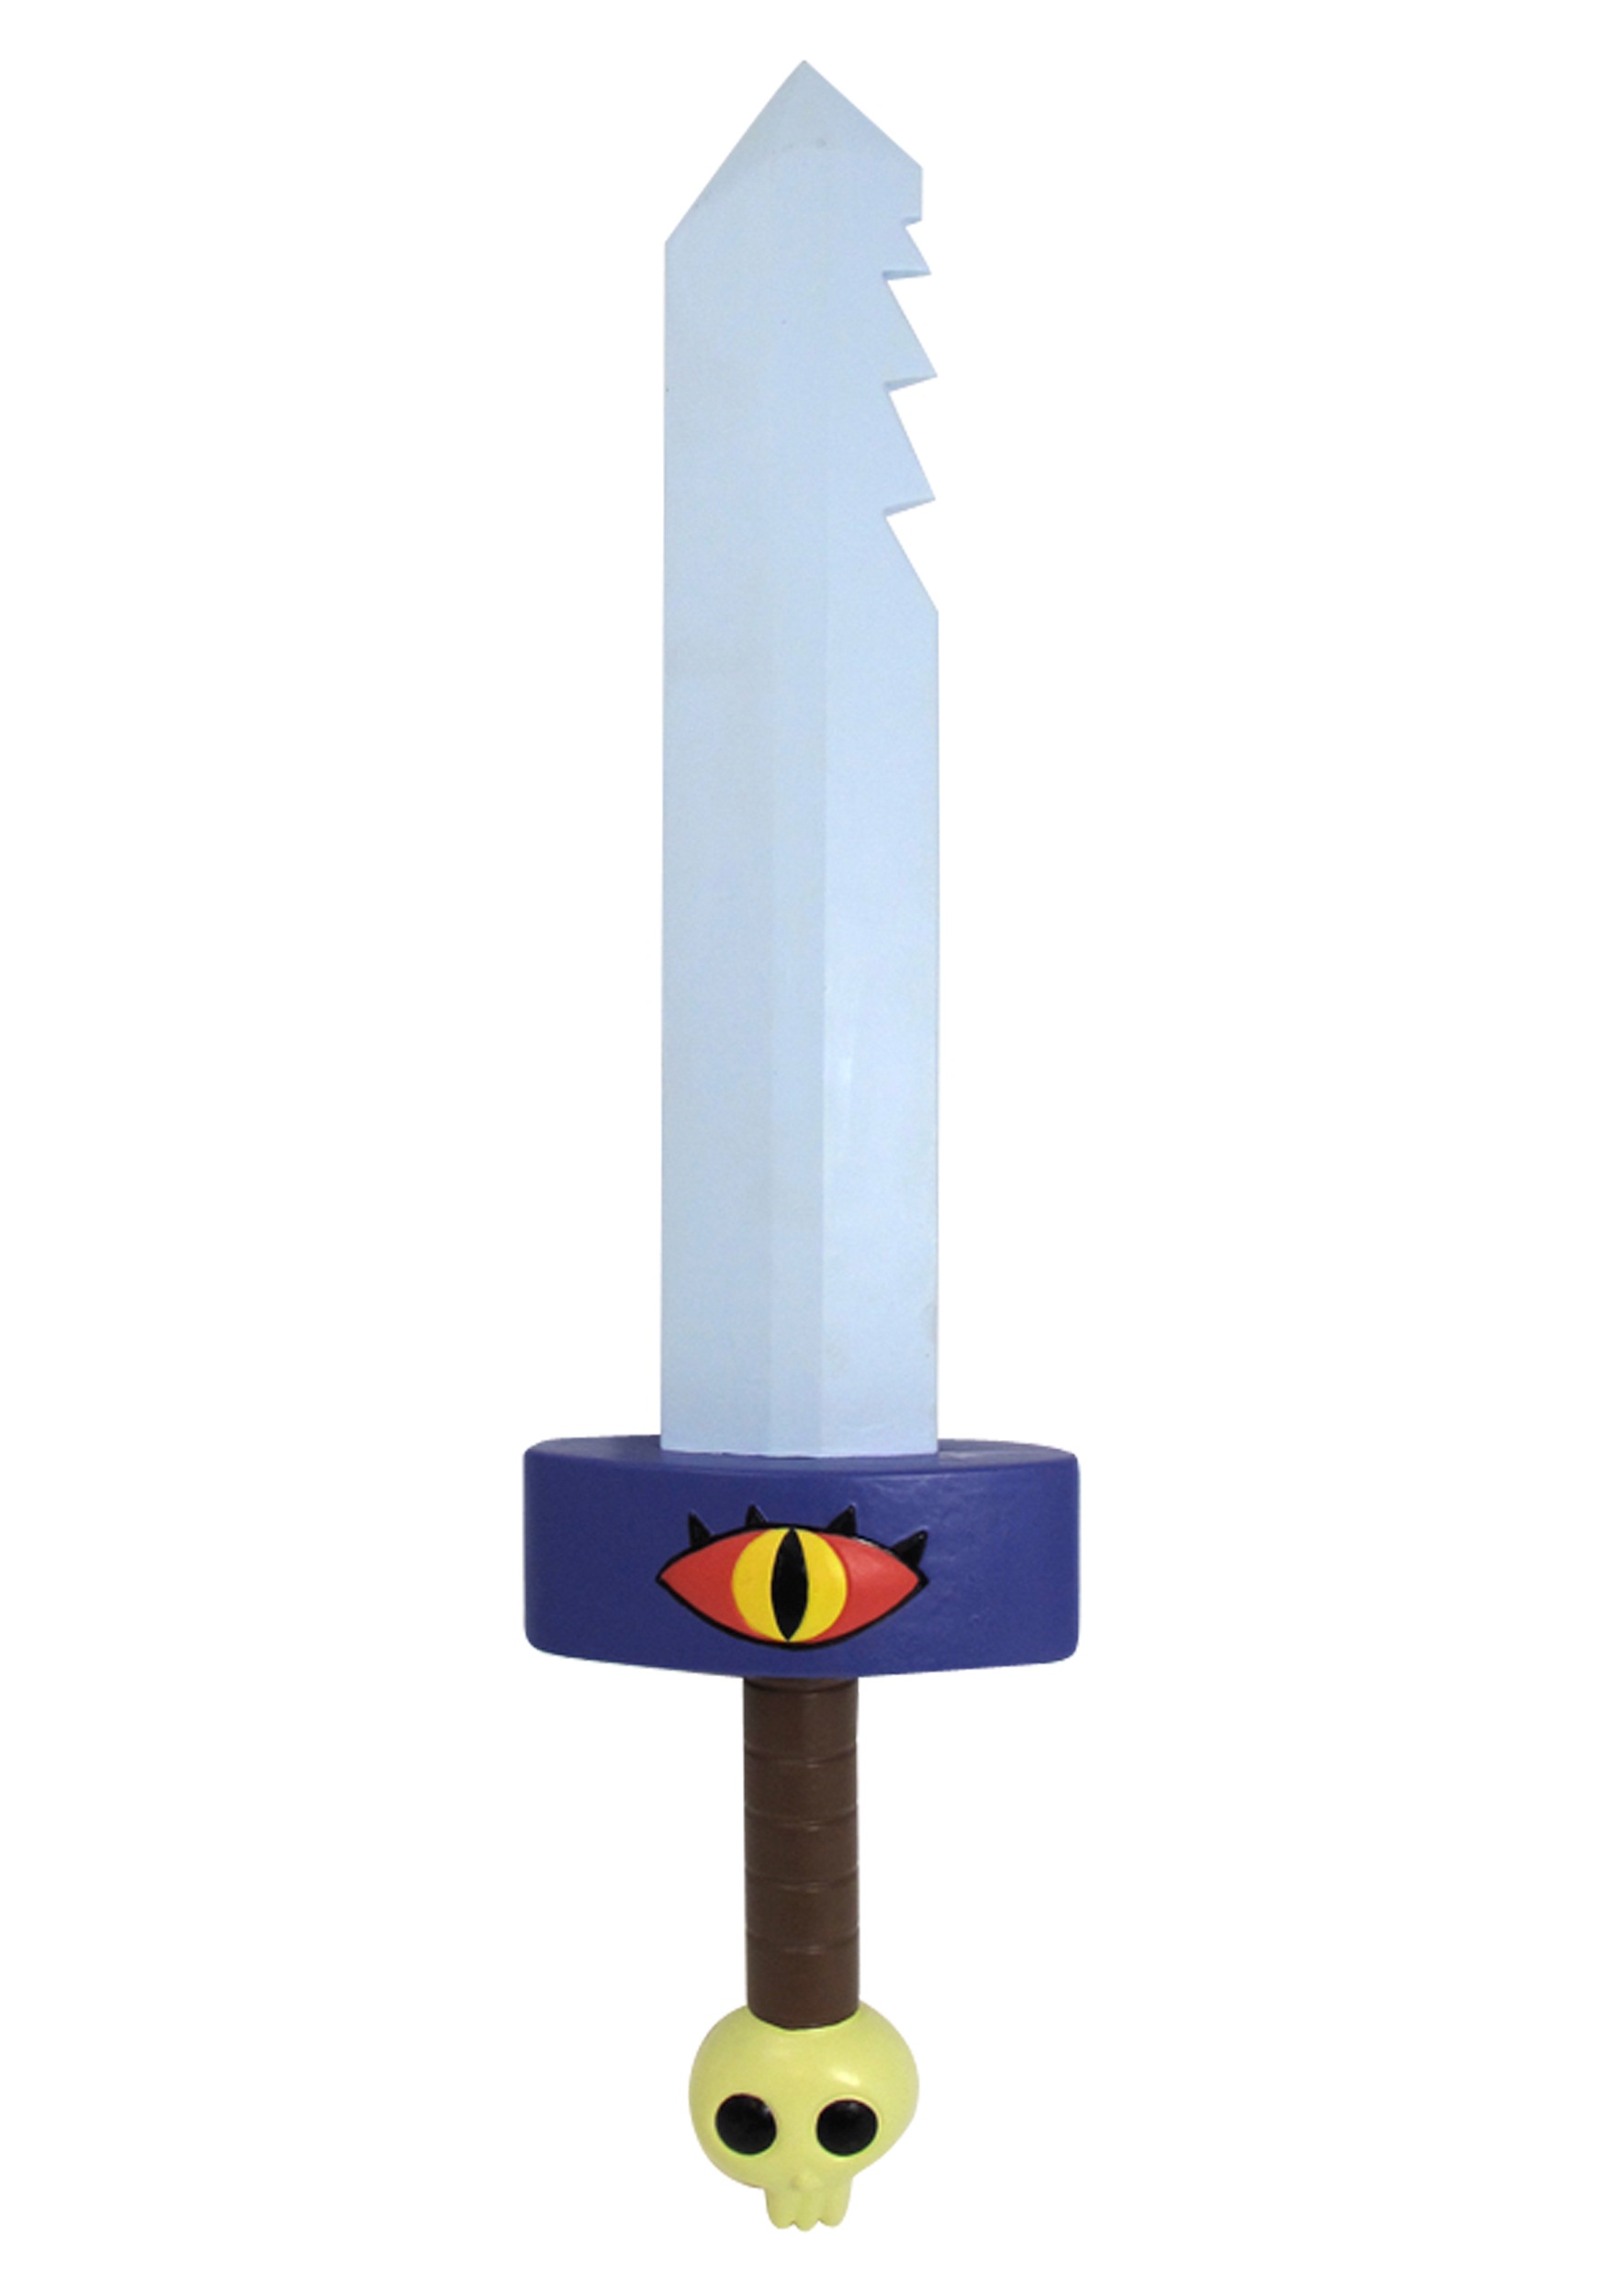 Adventure Time Jake Sword